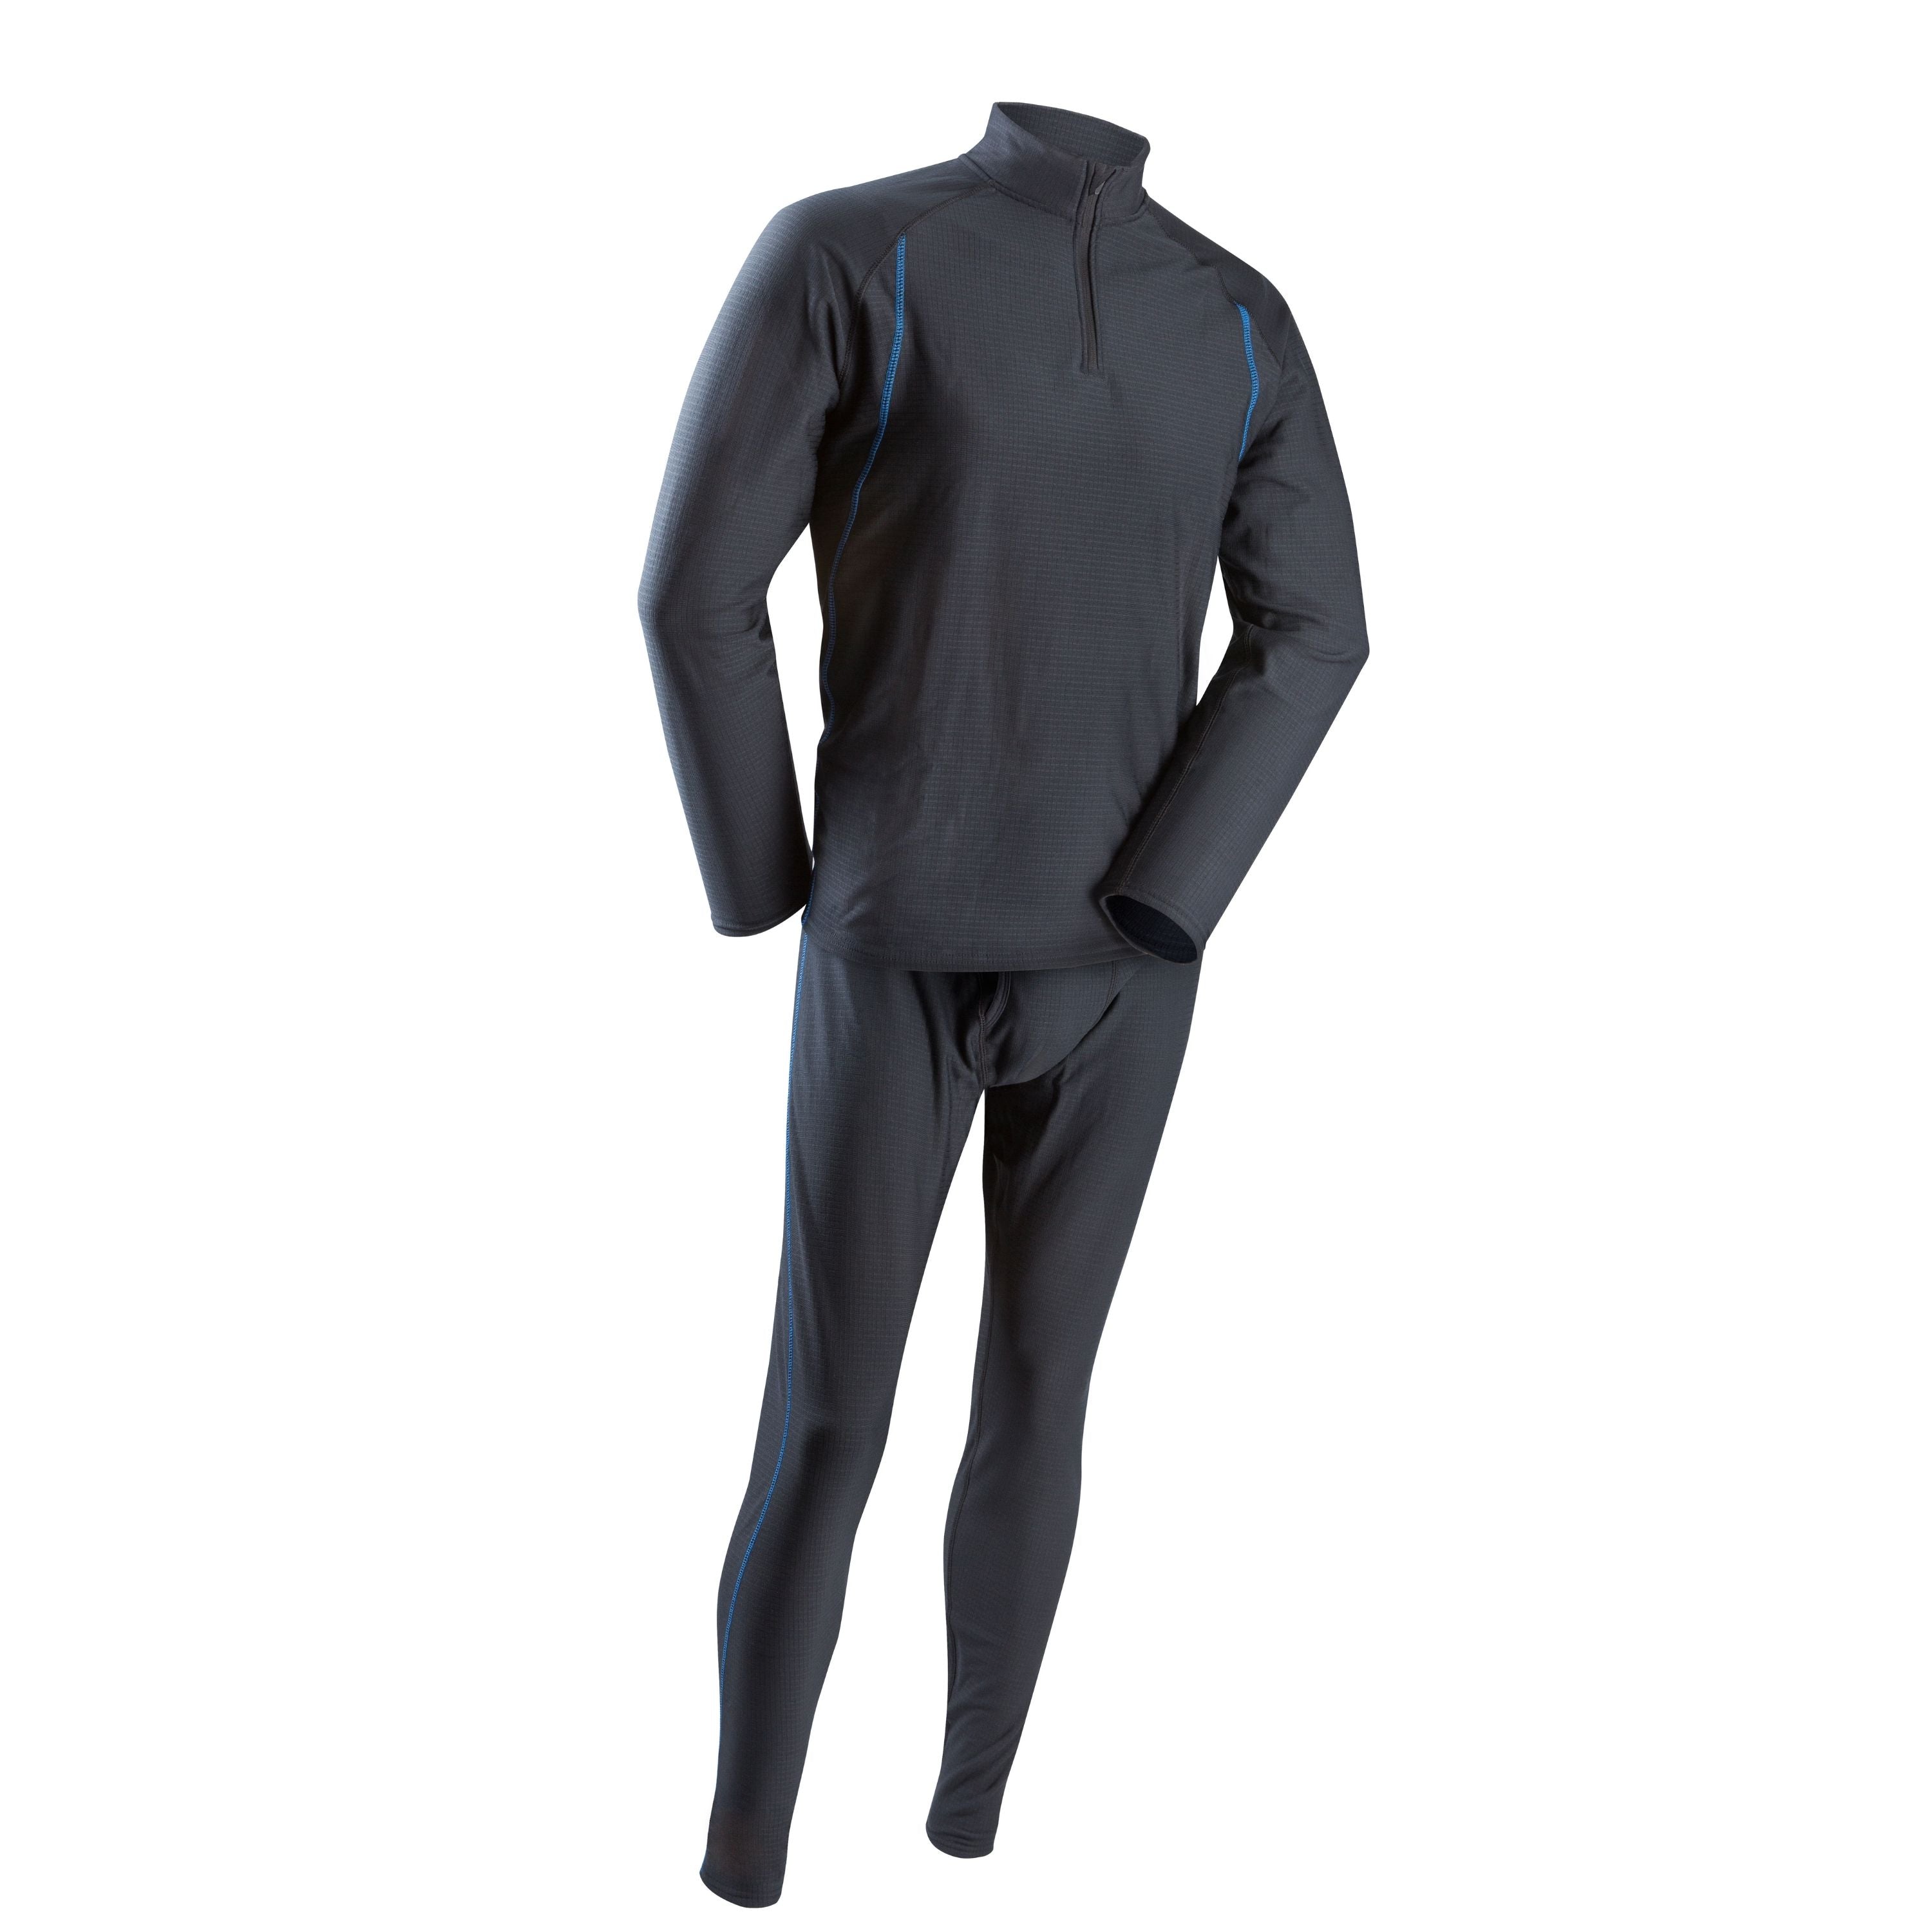 Pantalon sous-vêtement chauffant Primer 7,4V - Homme — Groupe